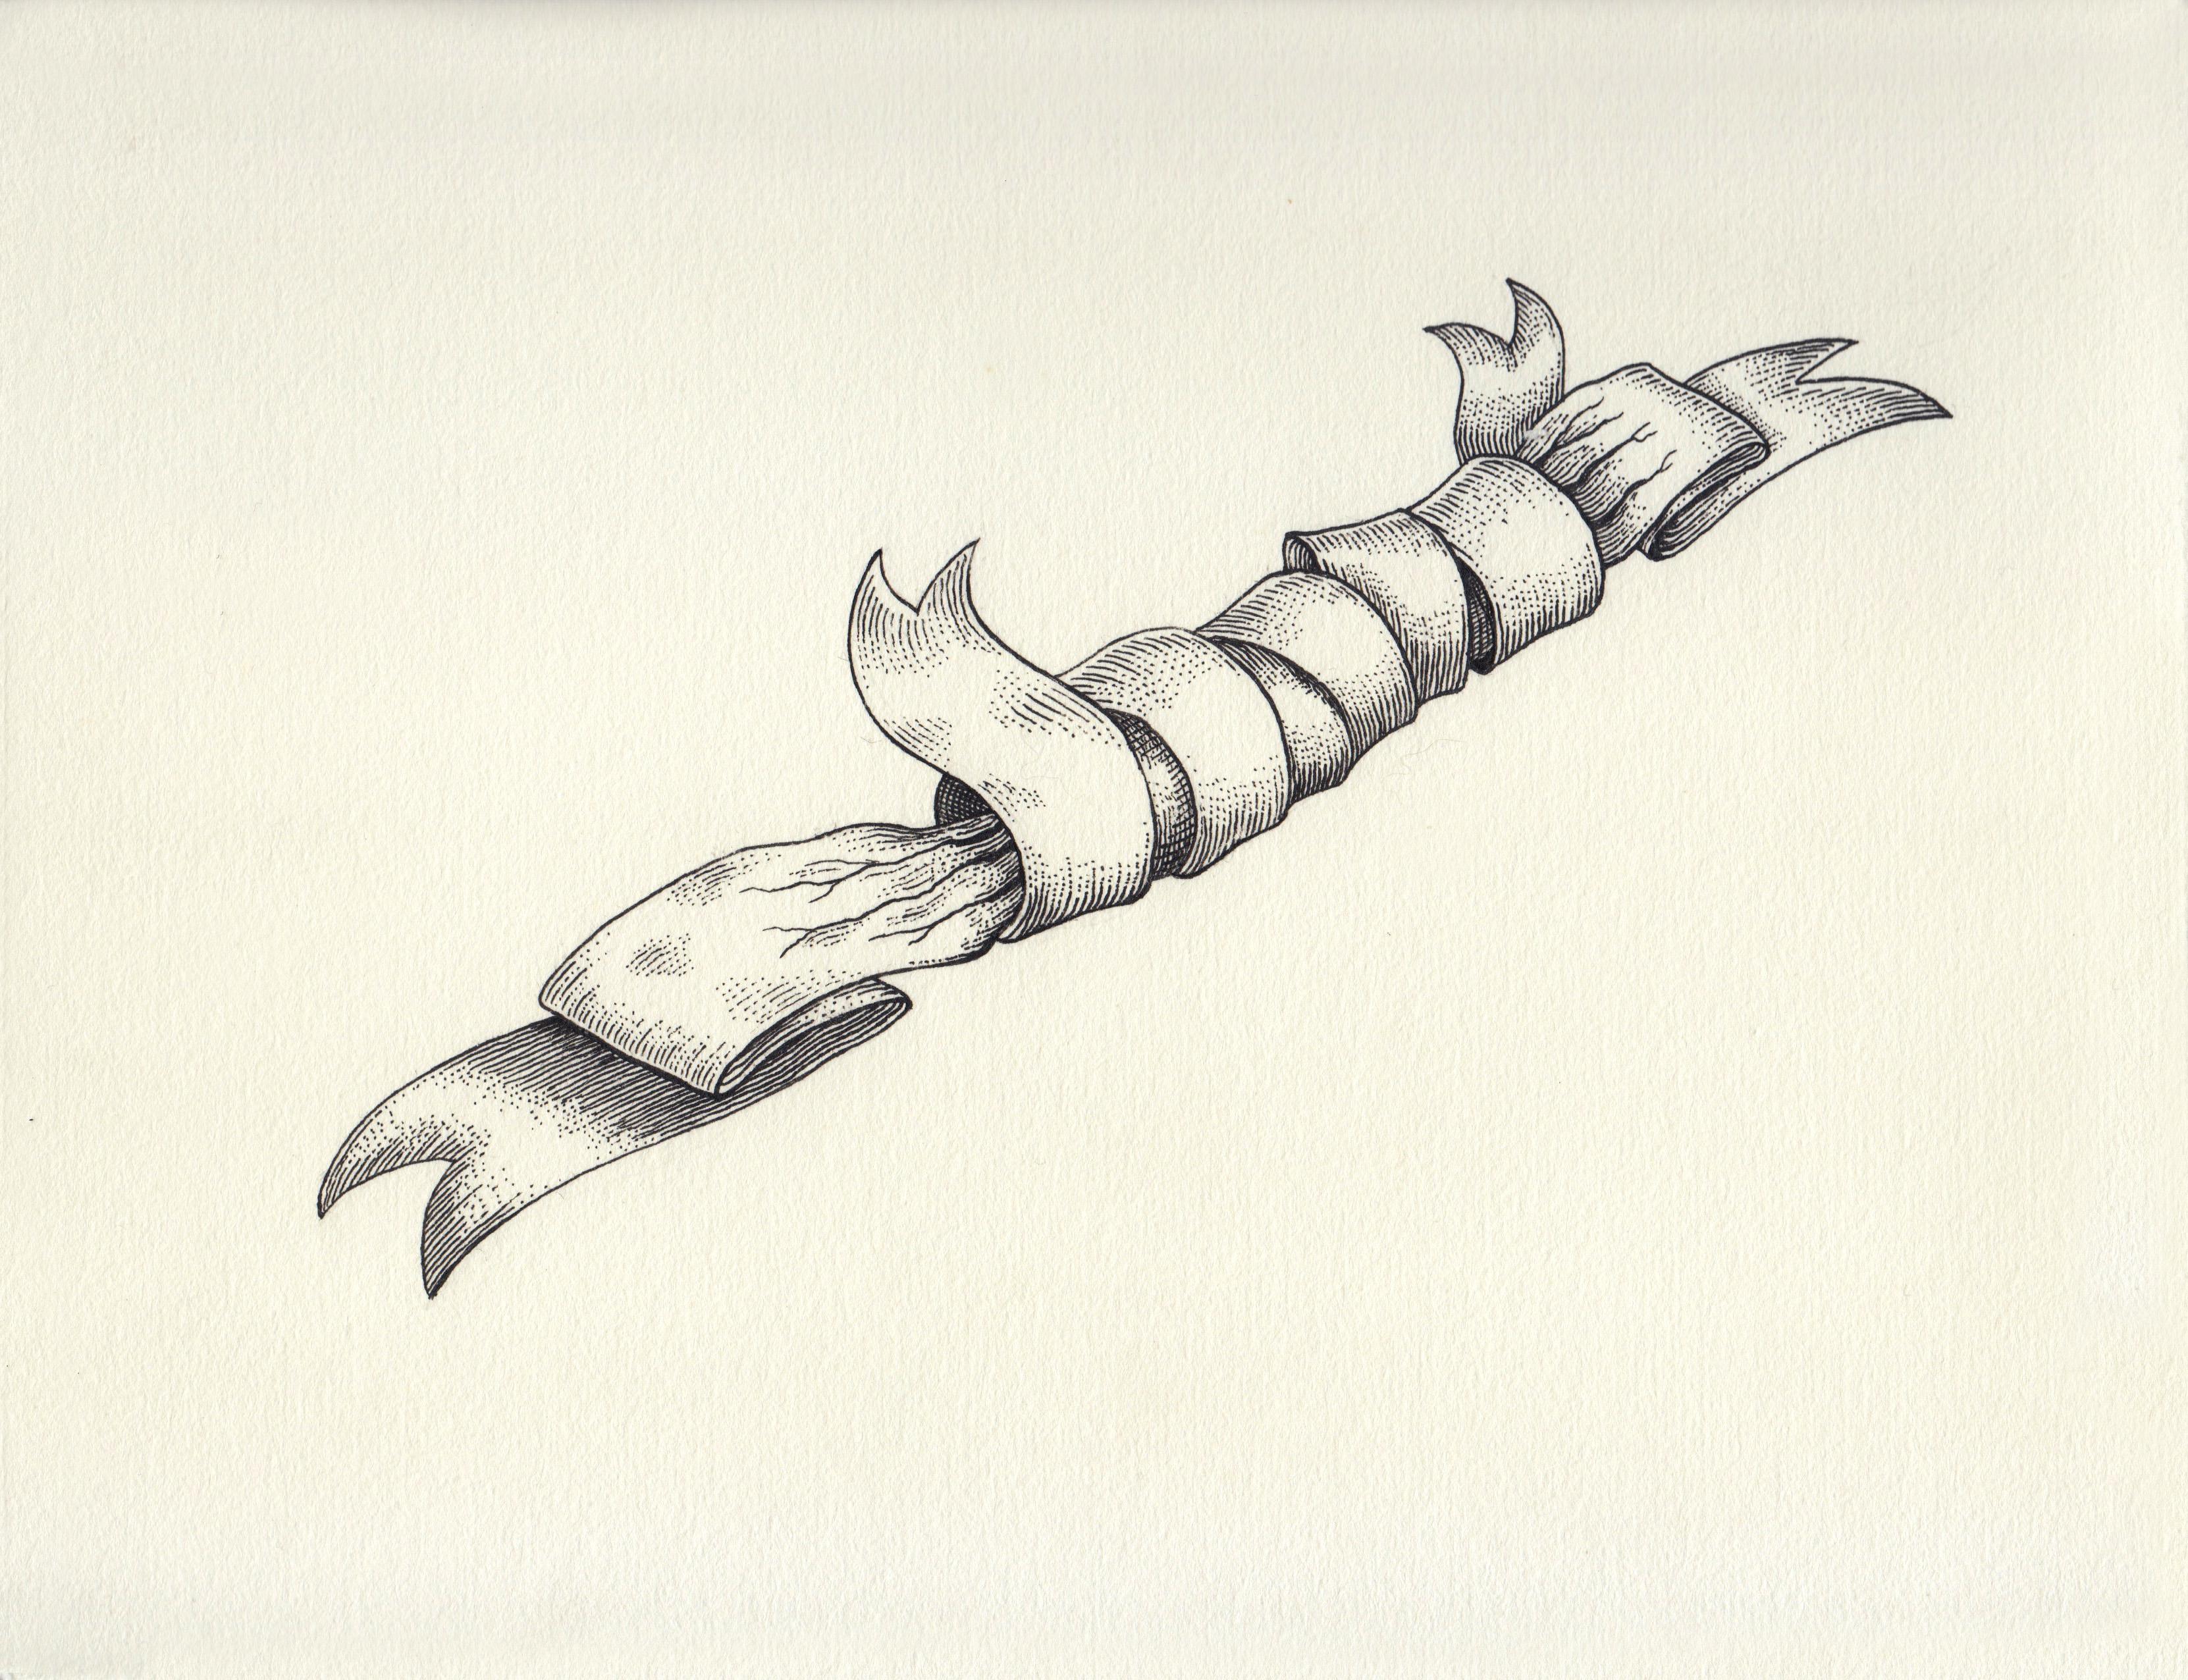 Renato Garza Cervera Figurative Art - Cannibal Constrictor Banner with prey